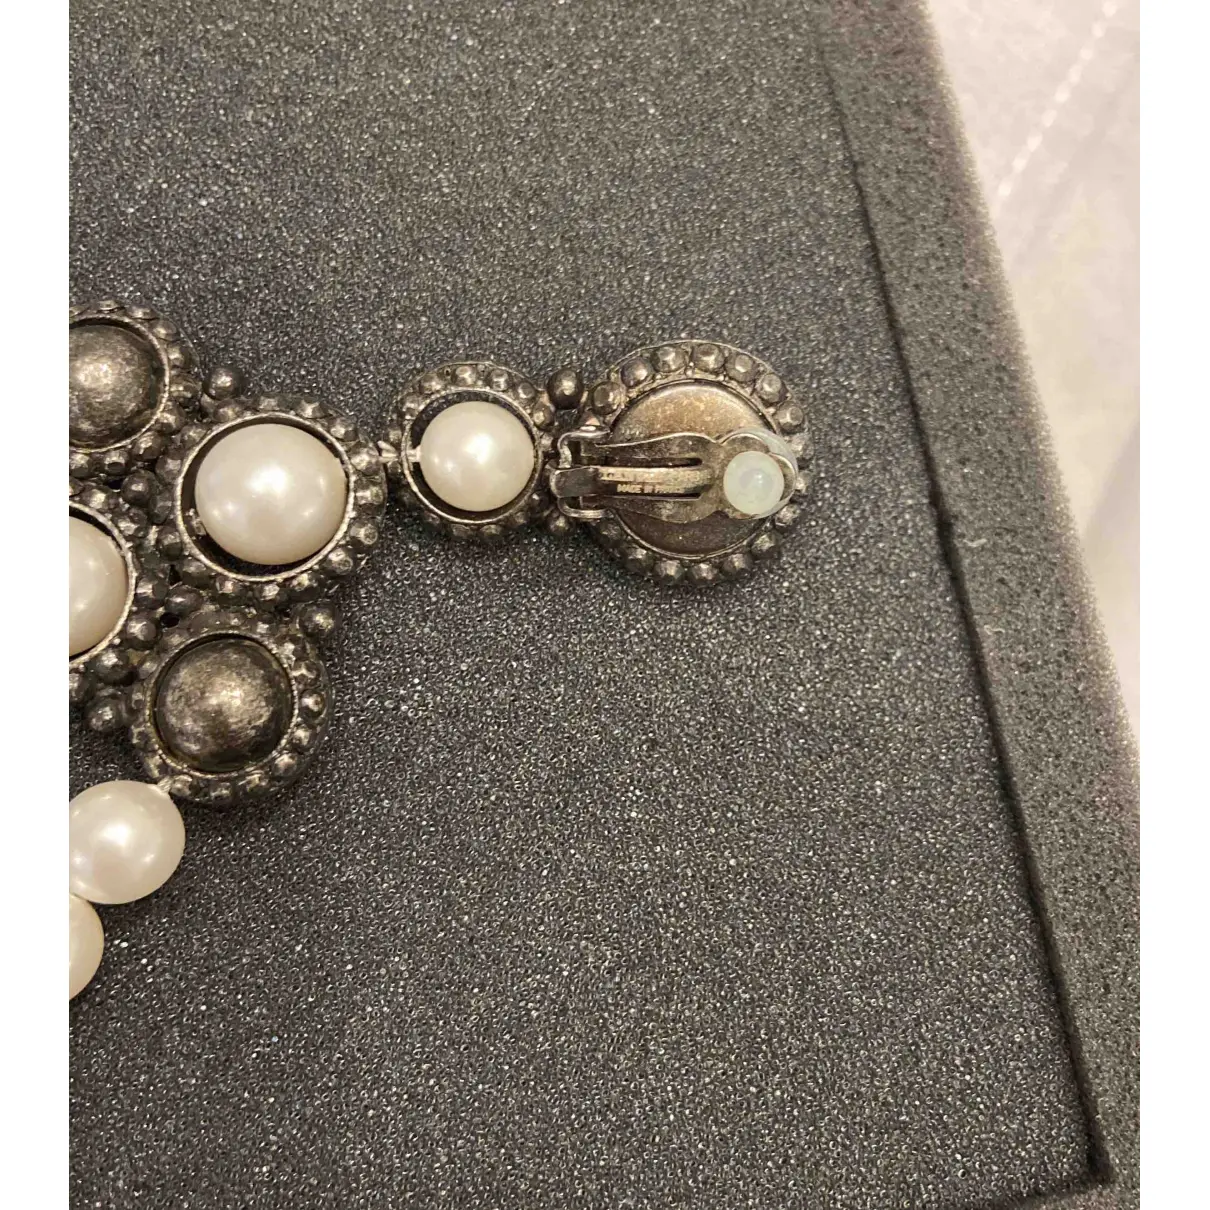 Buy Lanvin Pearls earrings online